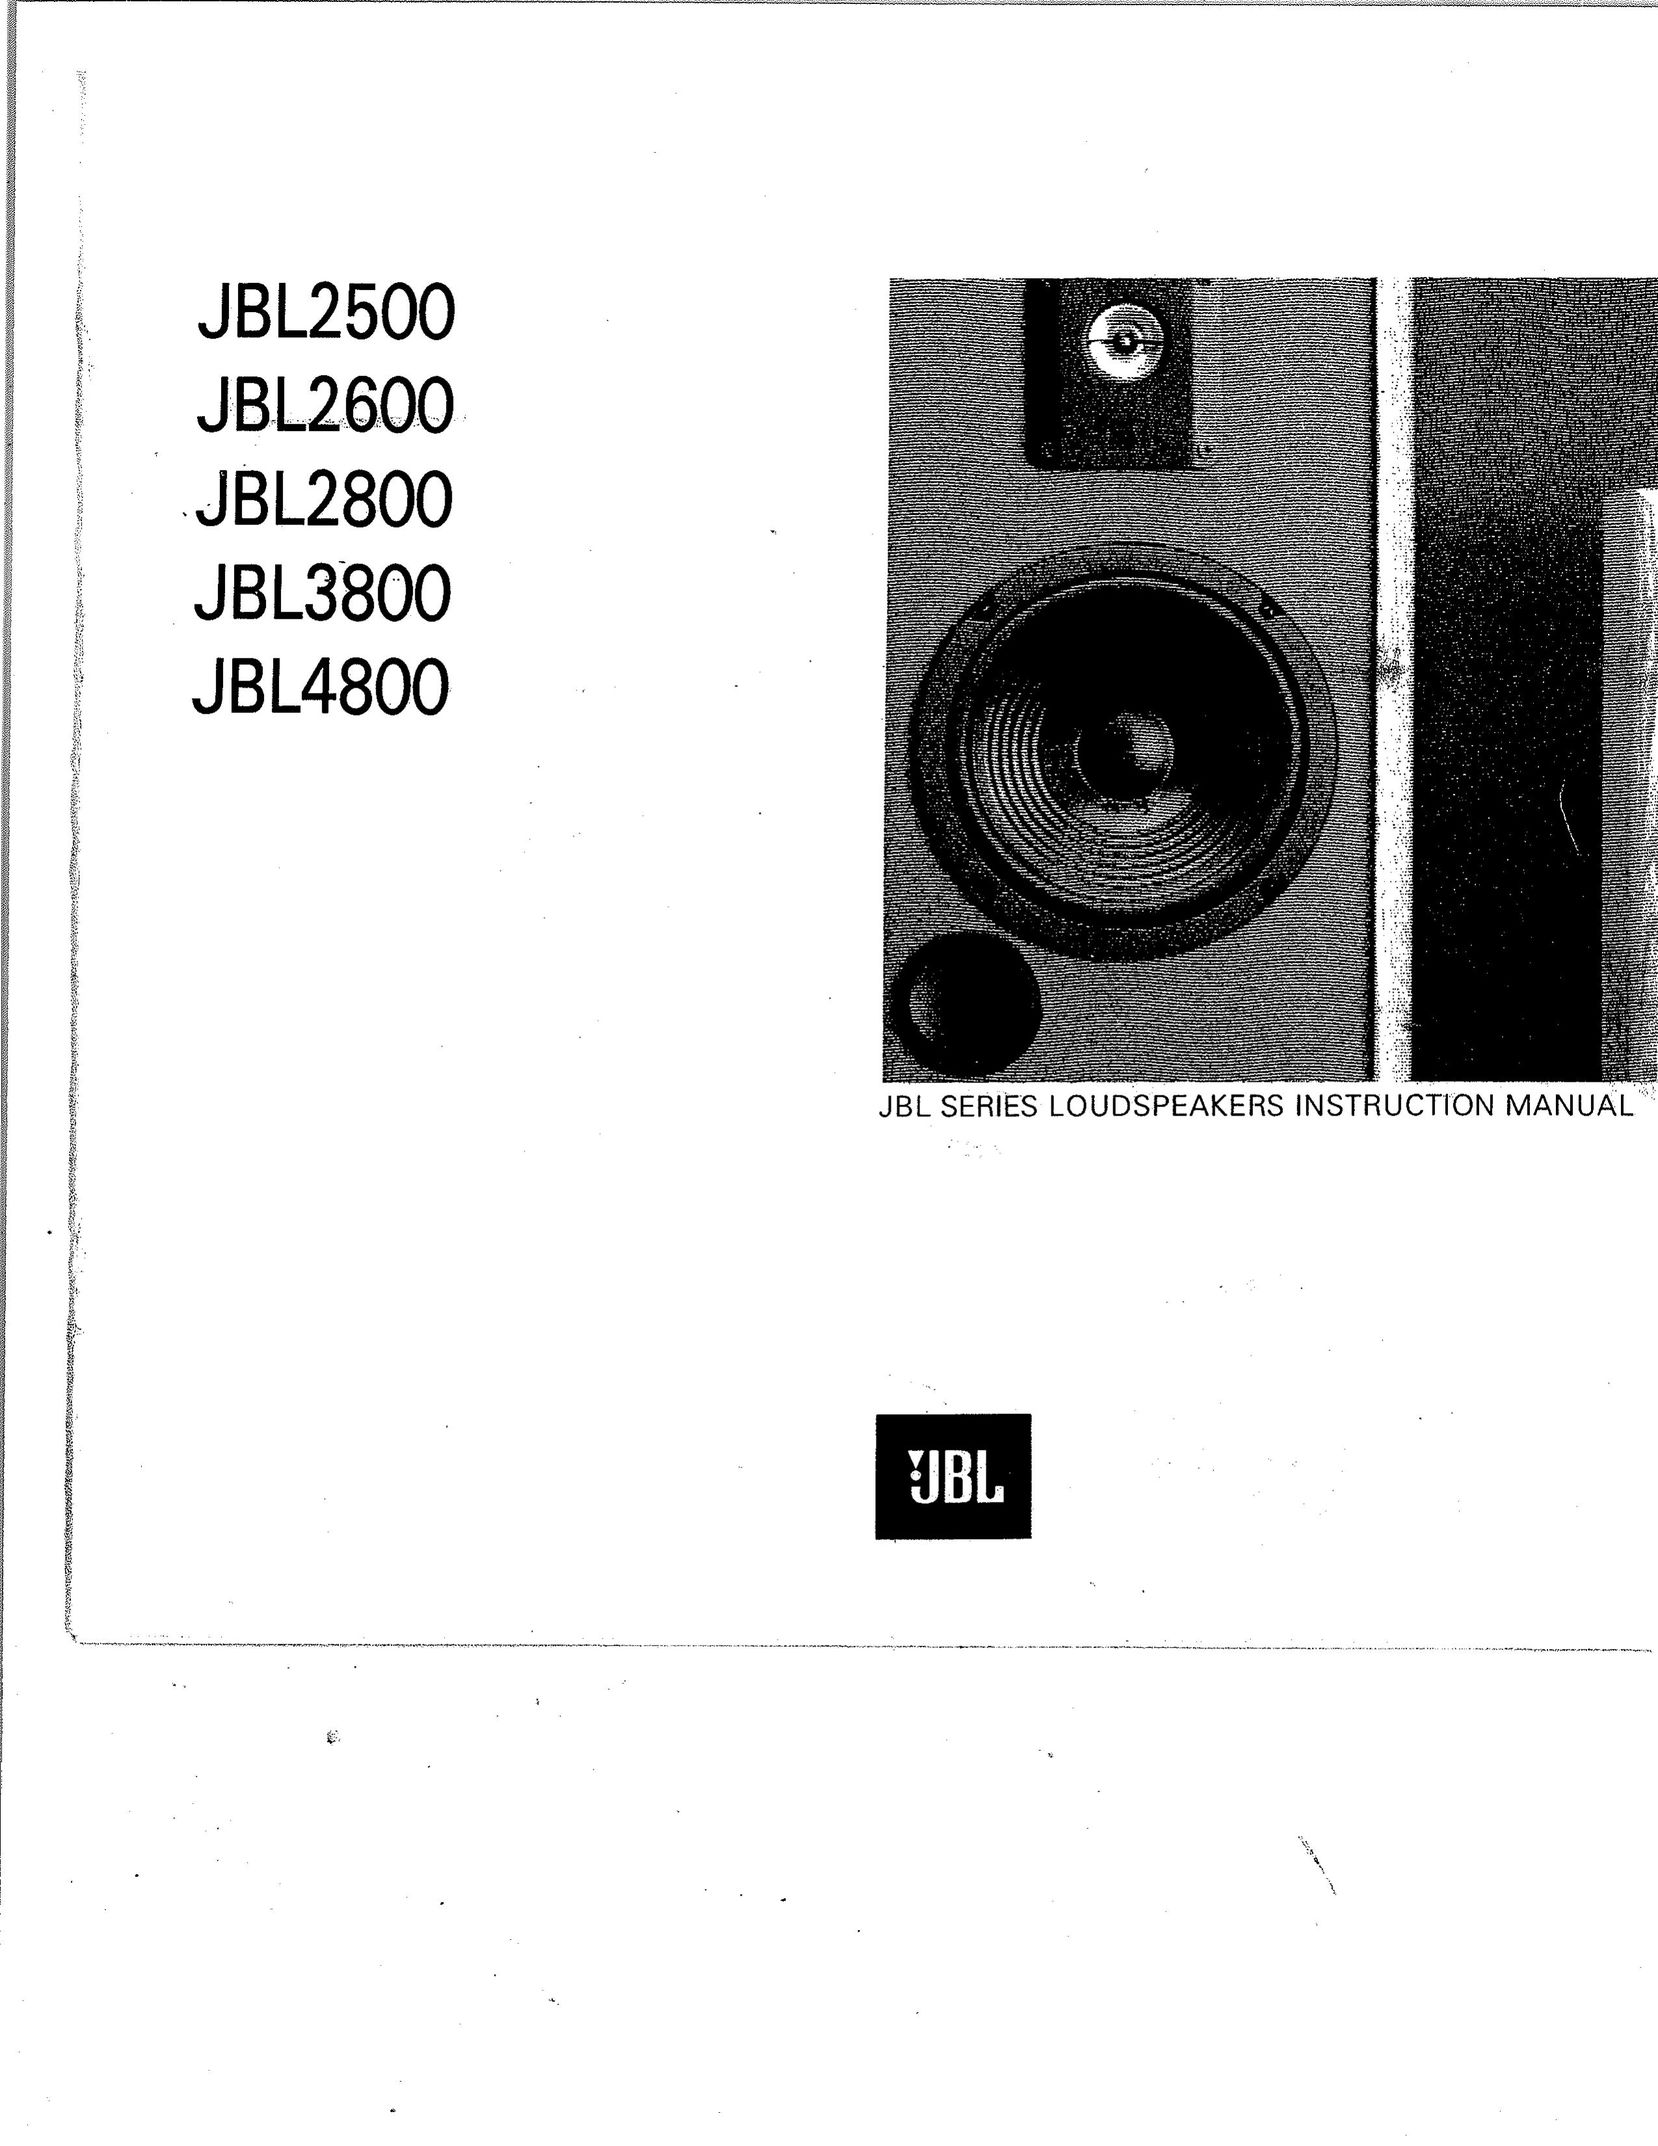 JBL 26OO Portable Speaker User Manual